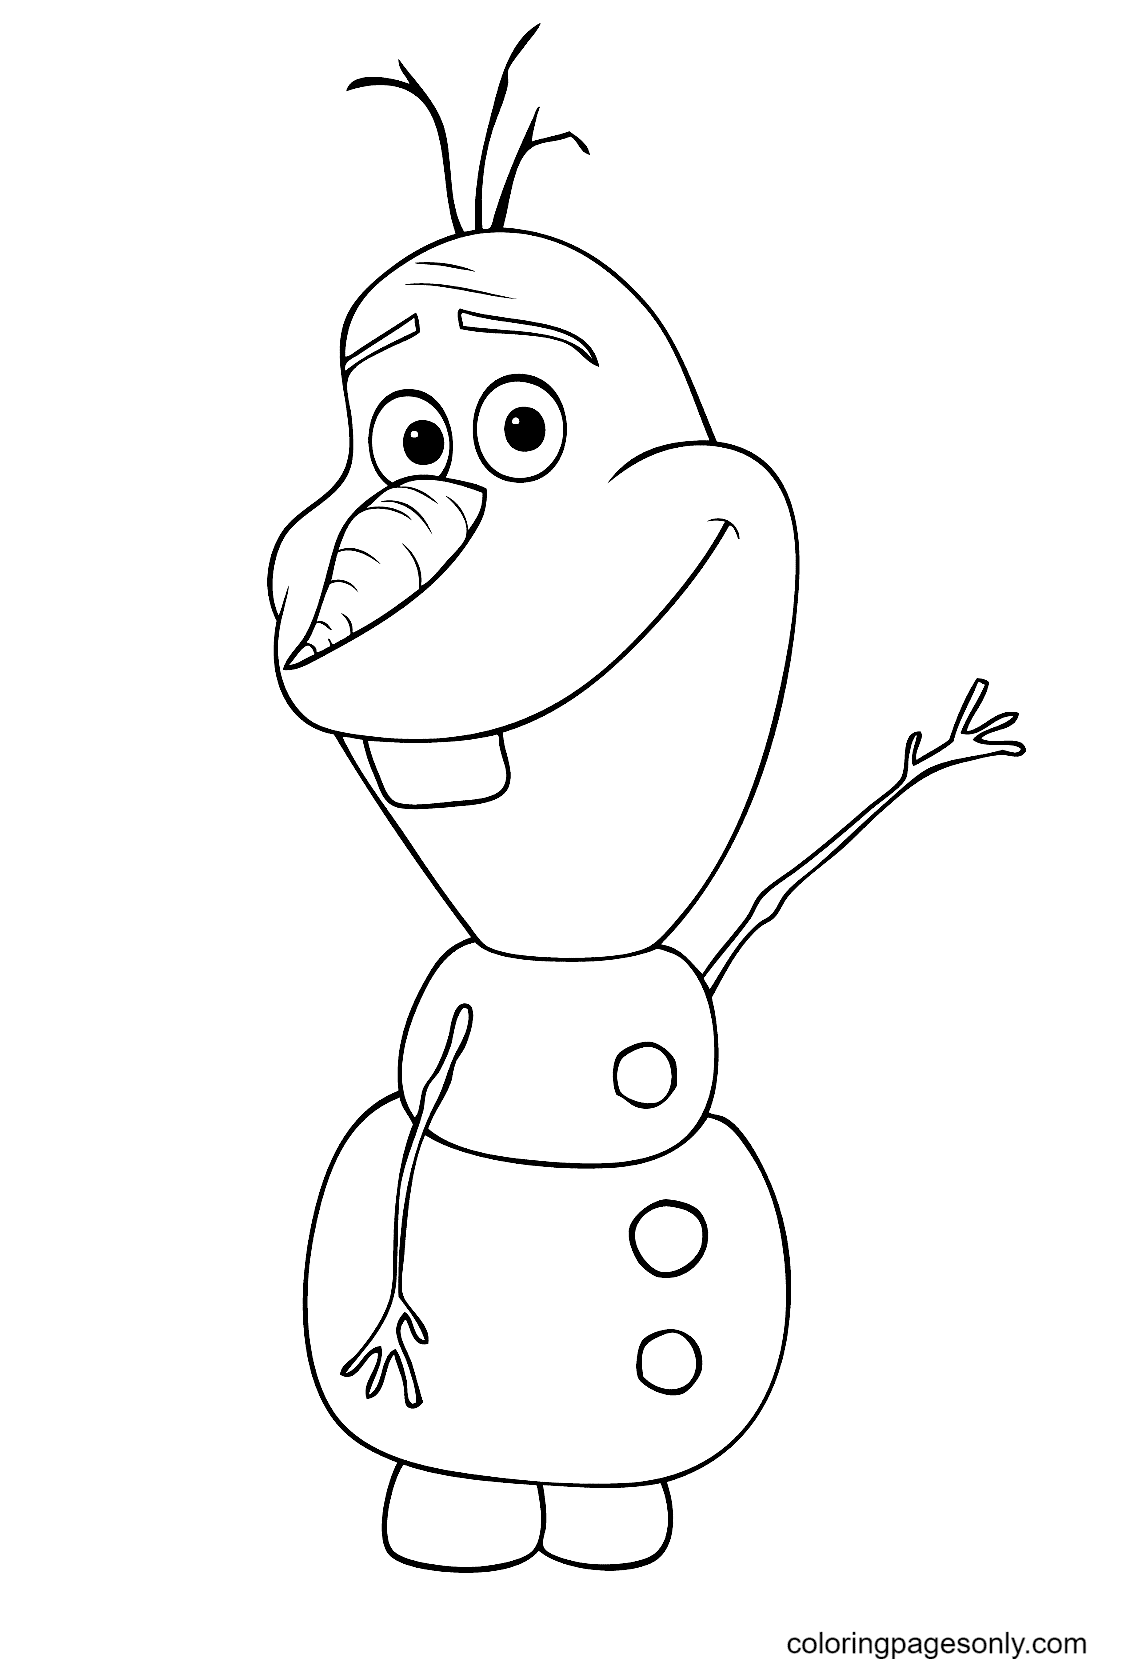 Olaf fofo de Olaf